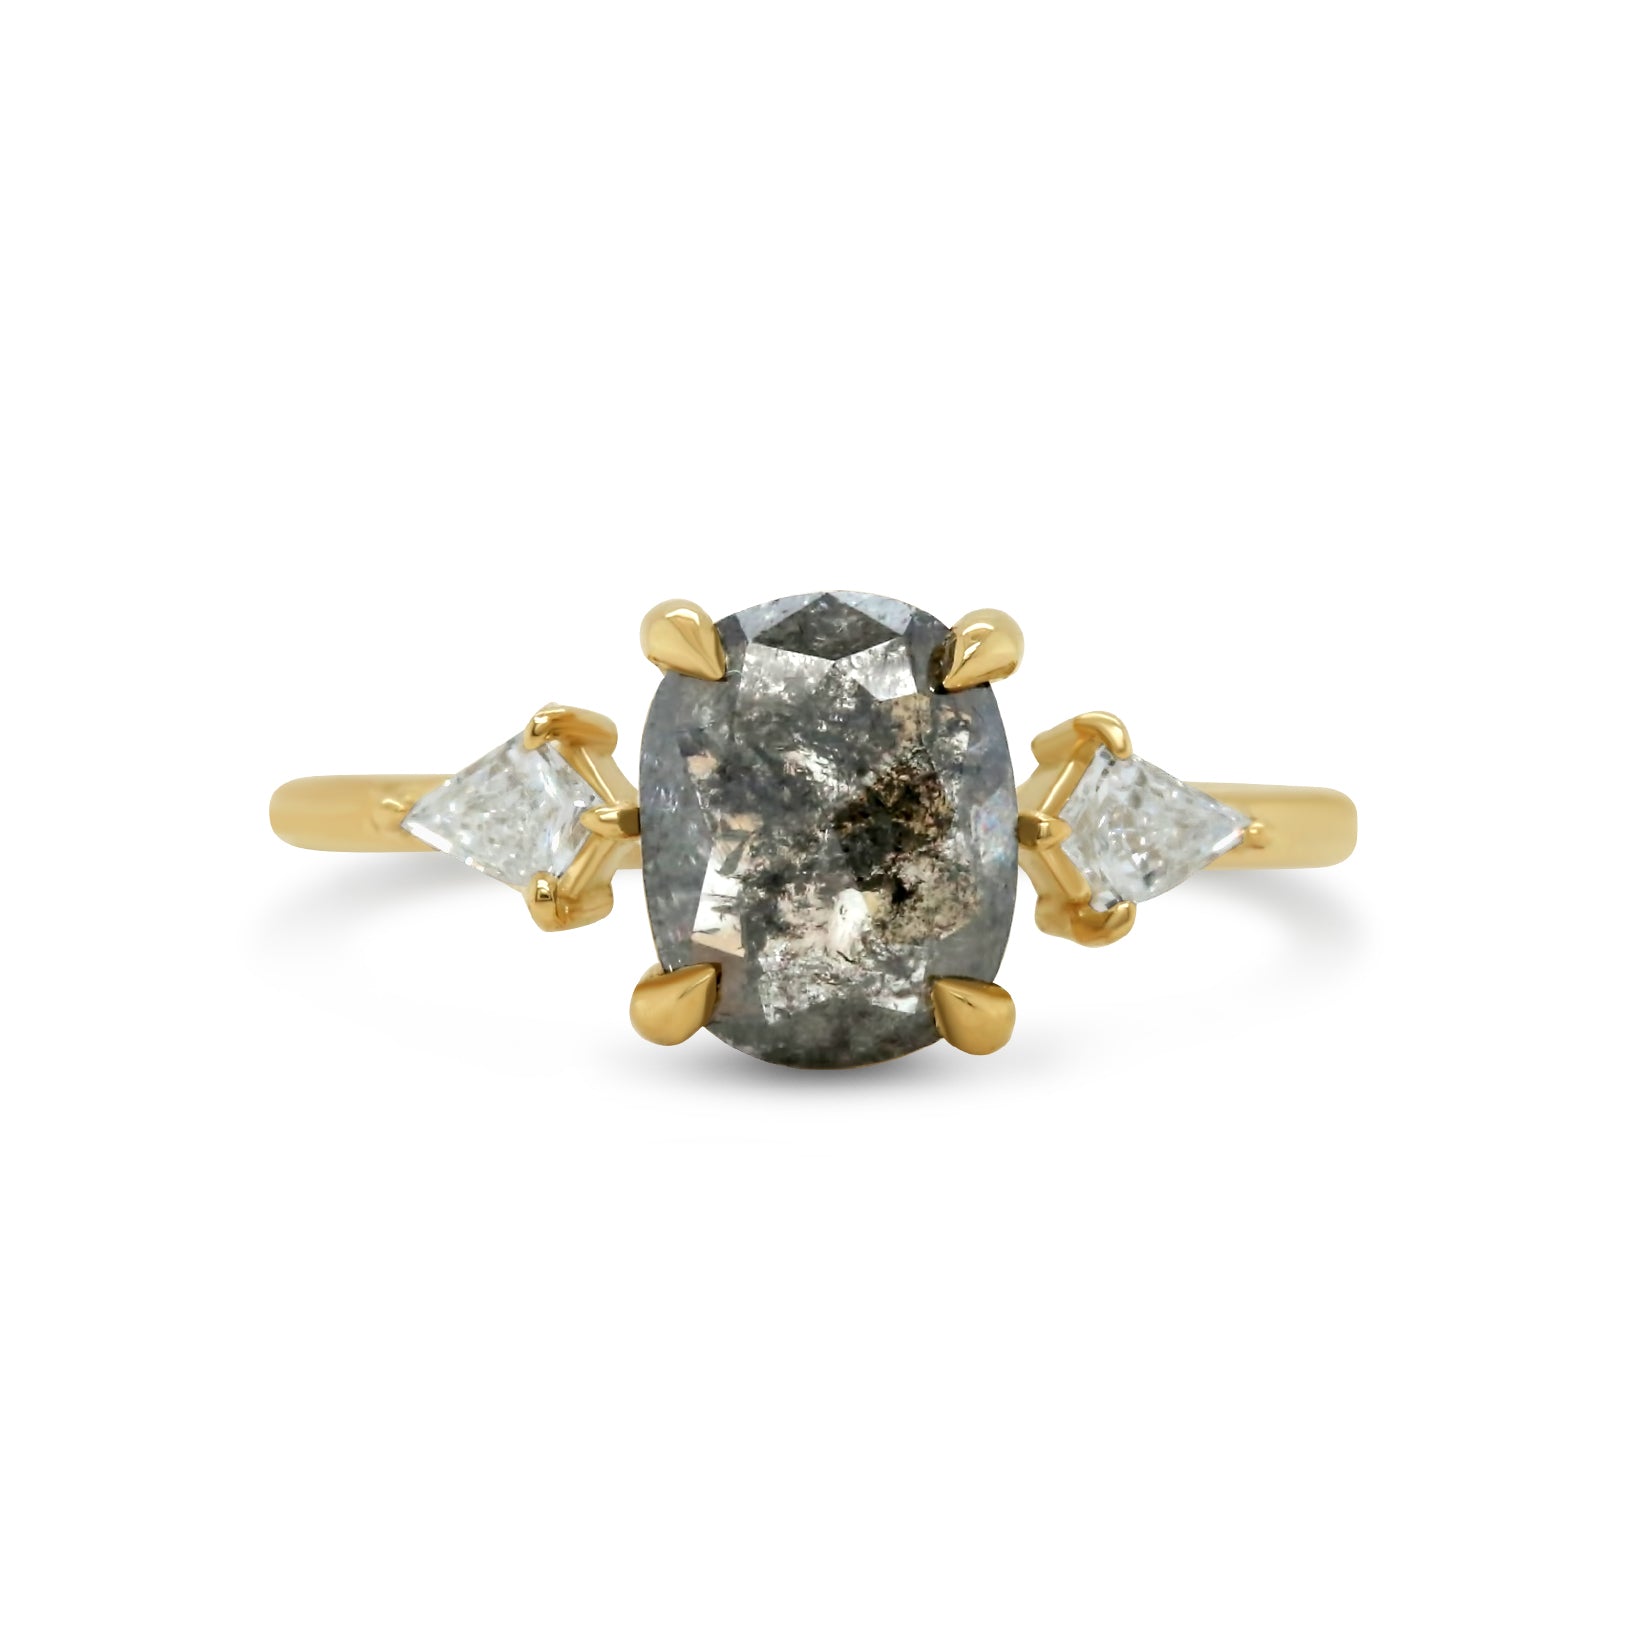 14k yellow gold three stone ring cushion rose cut gray diamond center stone with kite shape diamond side stones